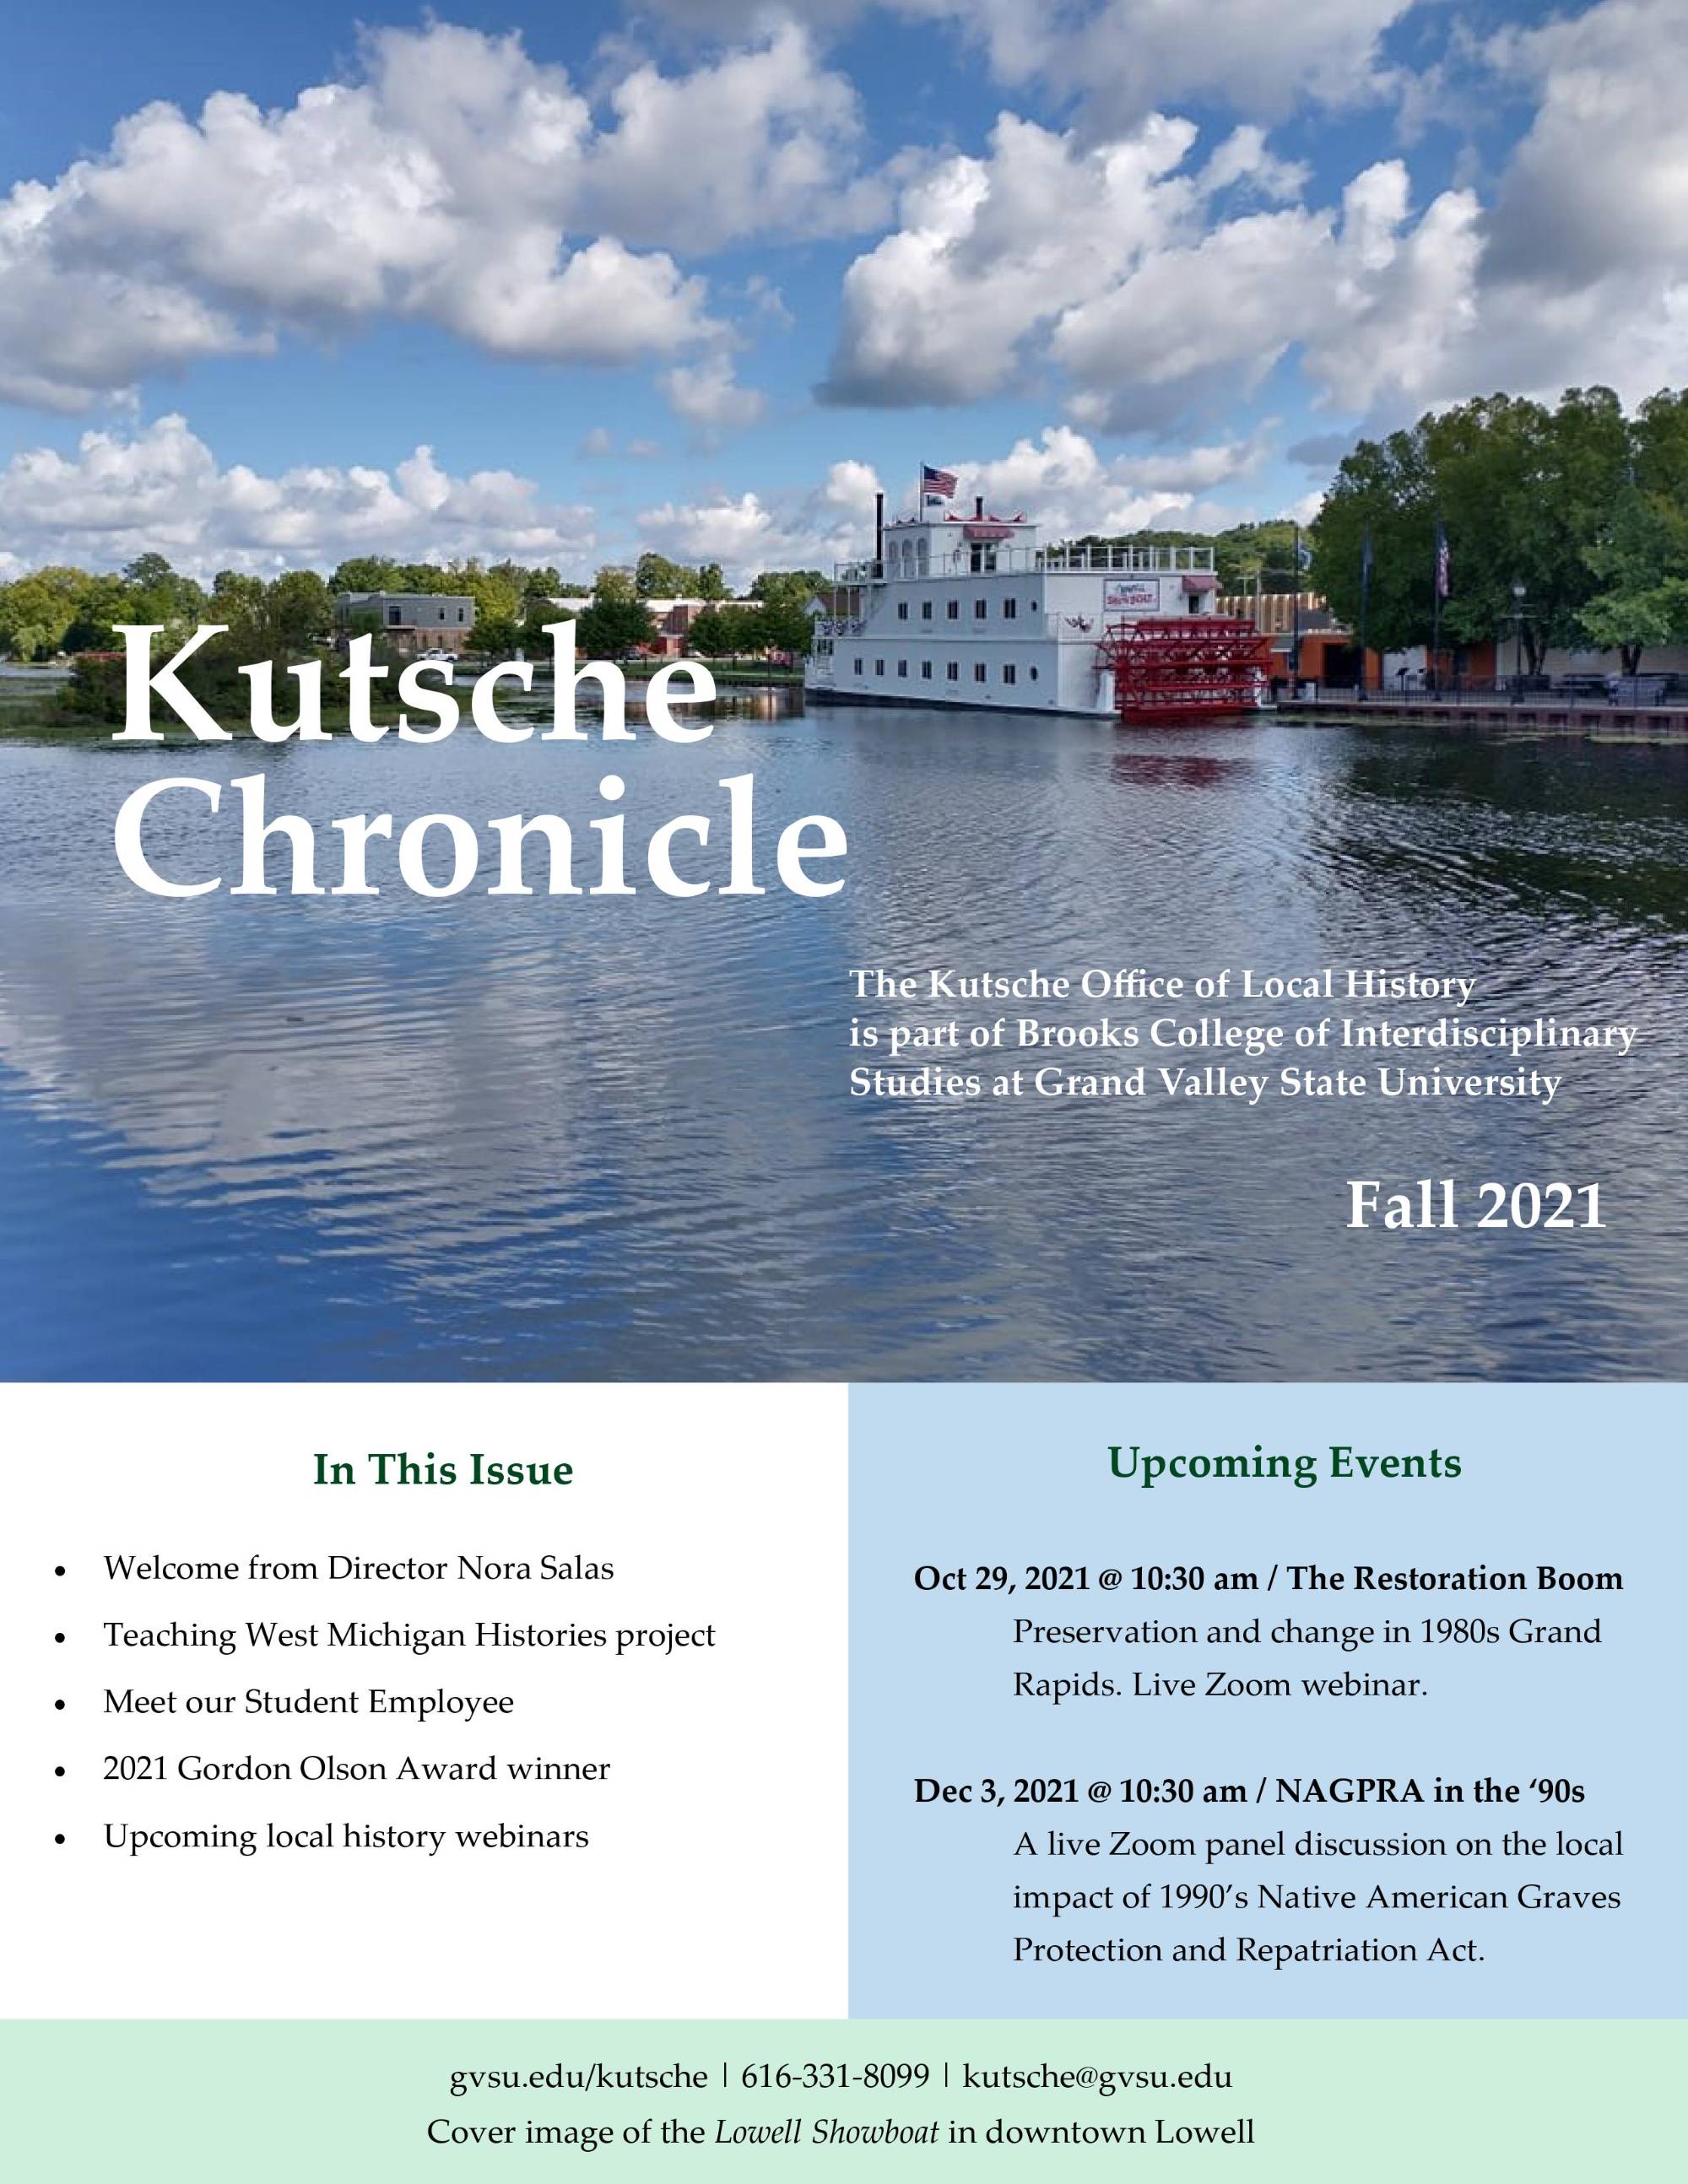 Fall 2021 Kutsche Chronicle cover